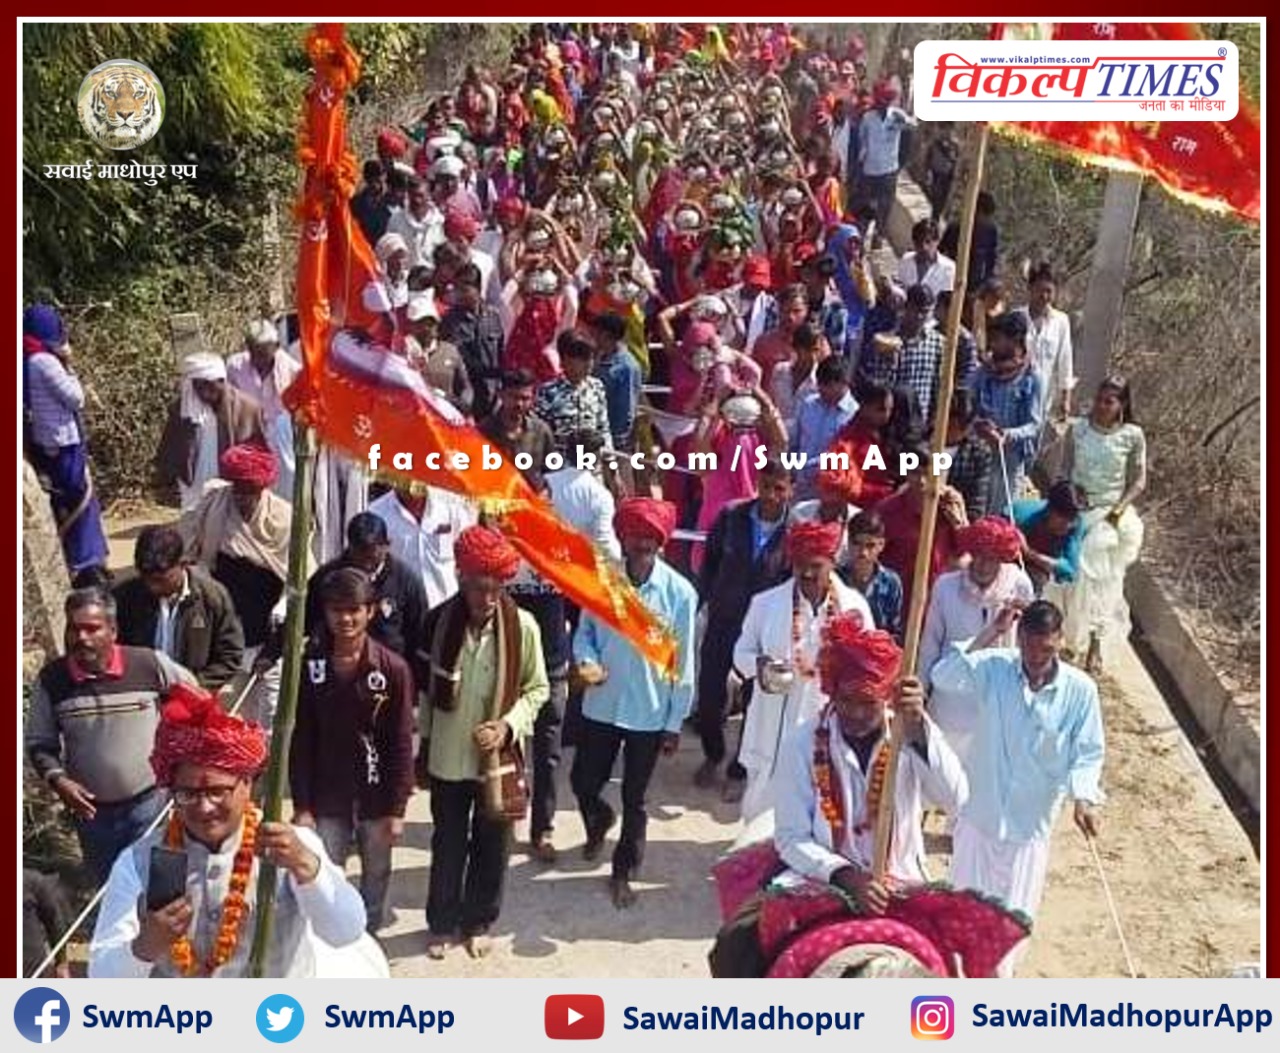 Crowd gathered in Kalash Yatra in sawai madhopur